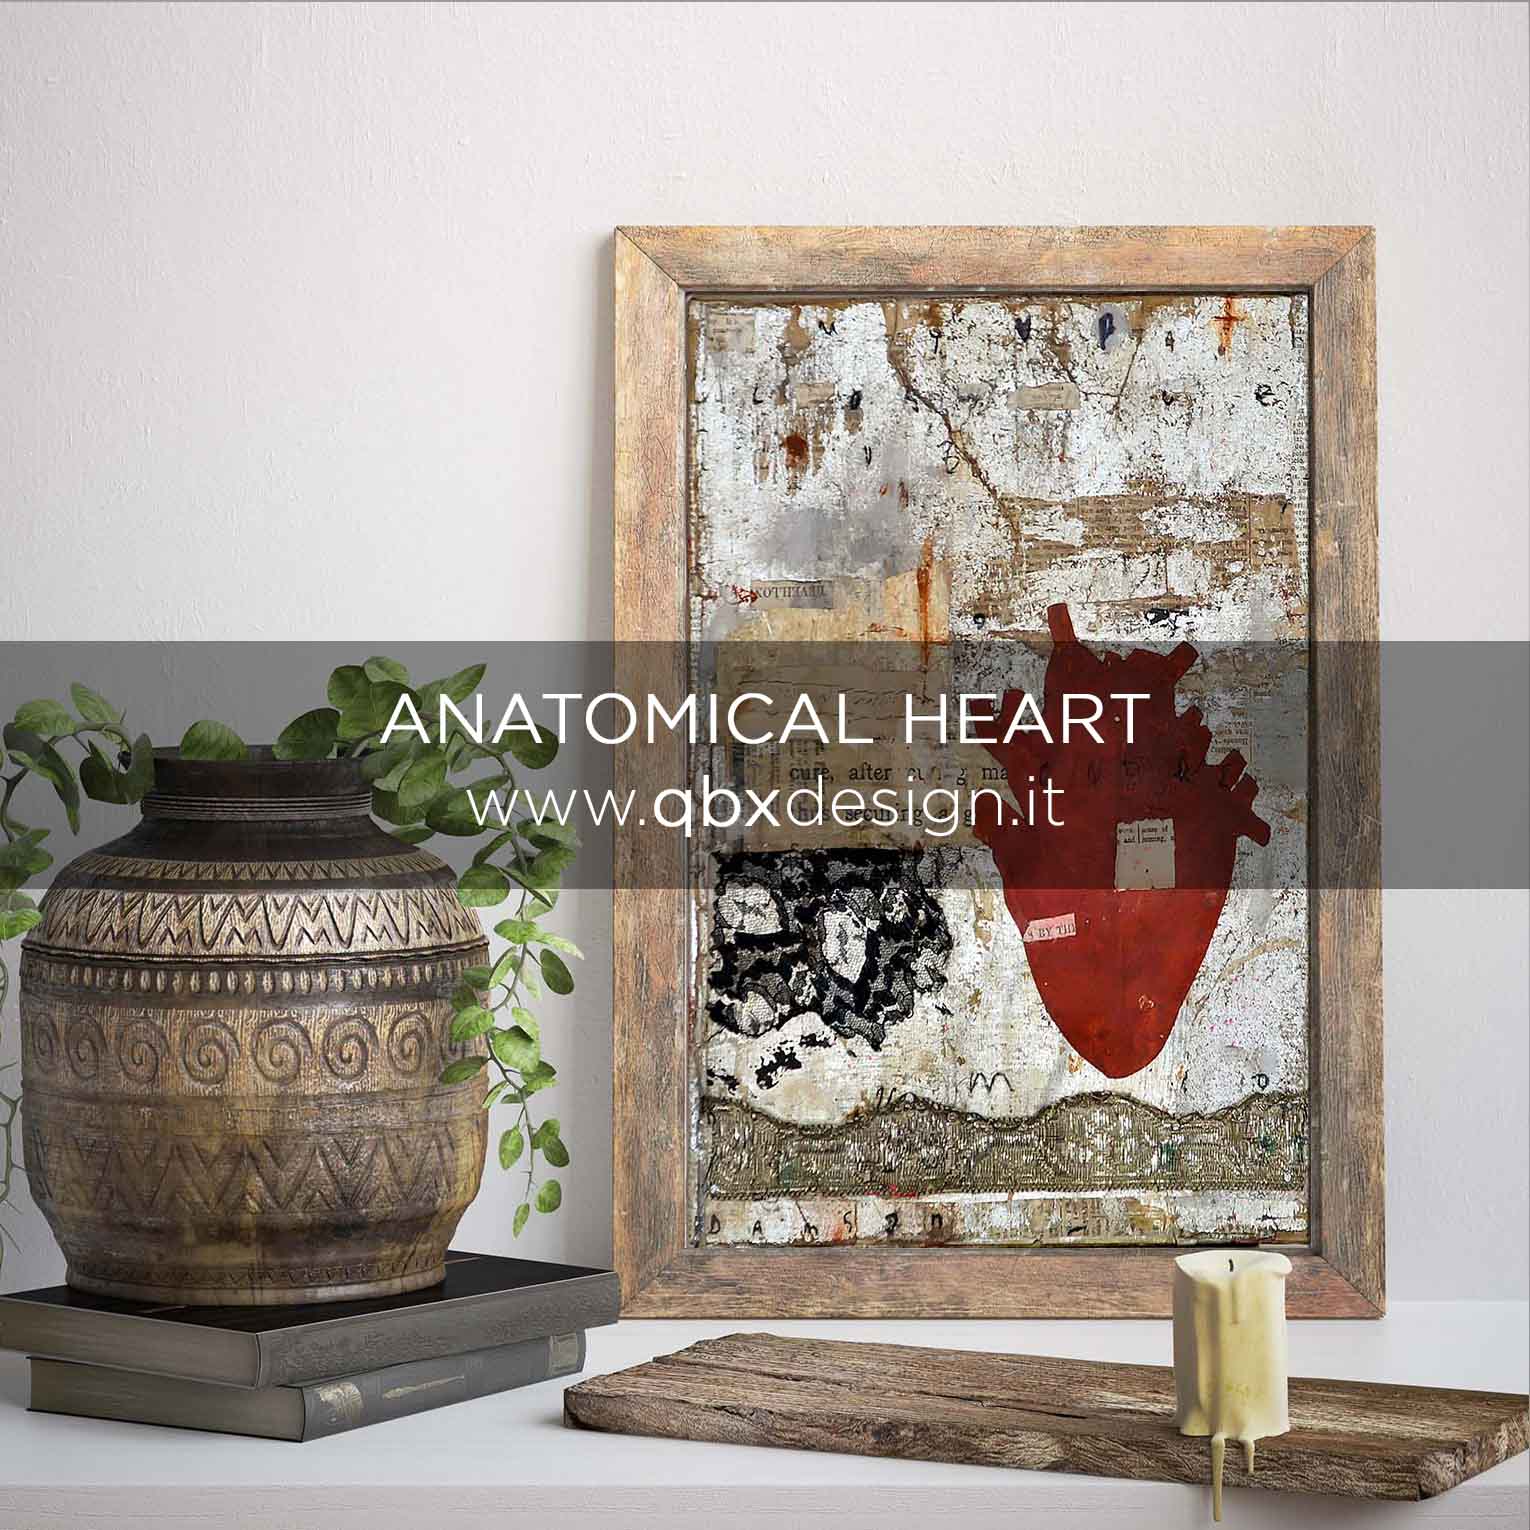 ANATOMICAL HEART